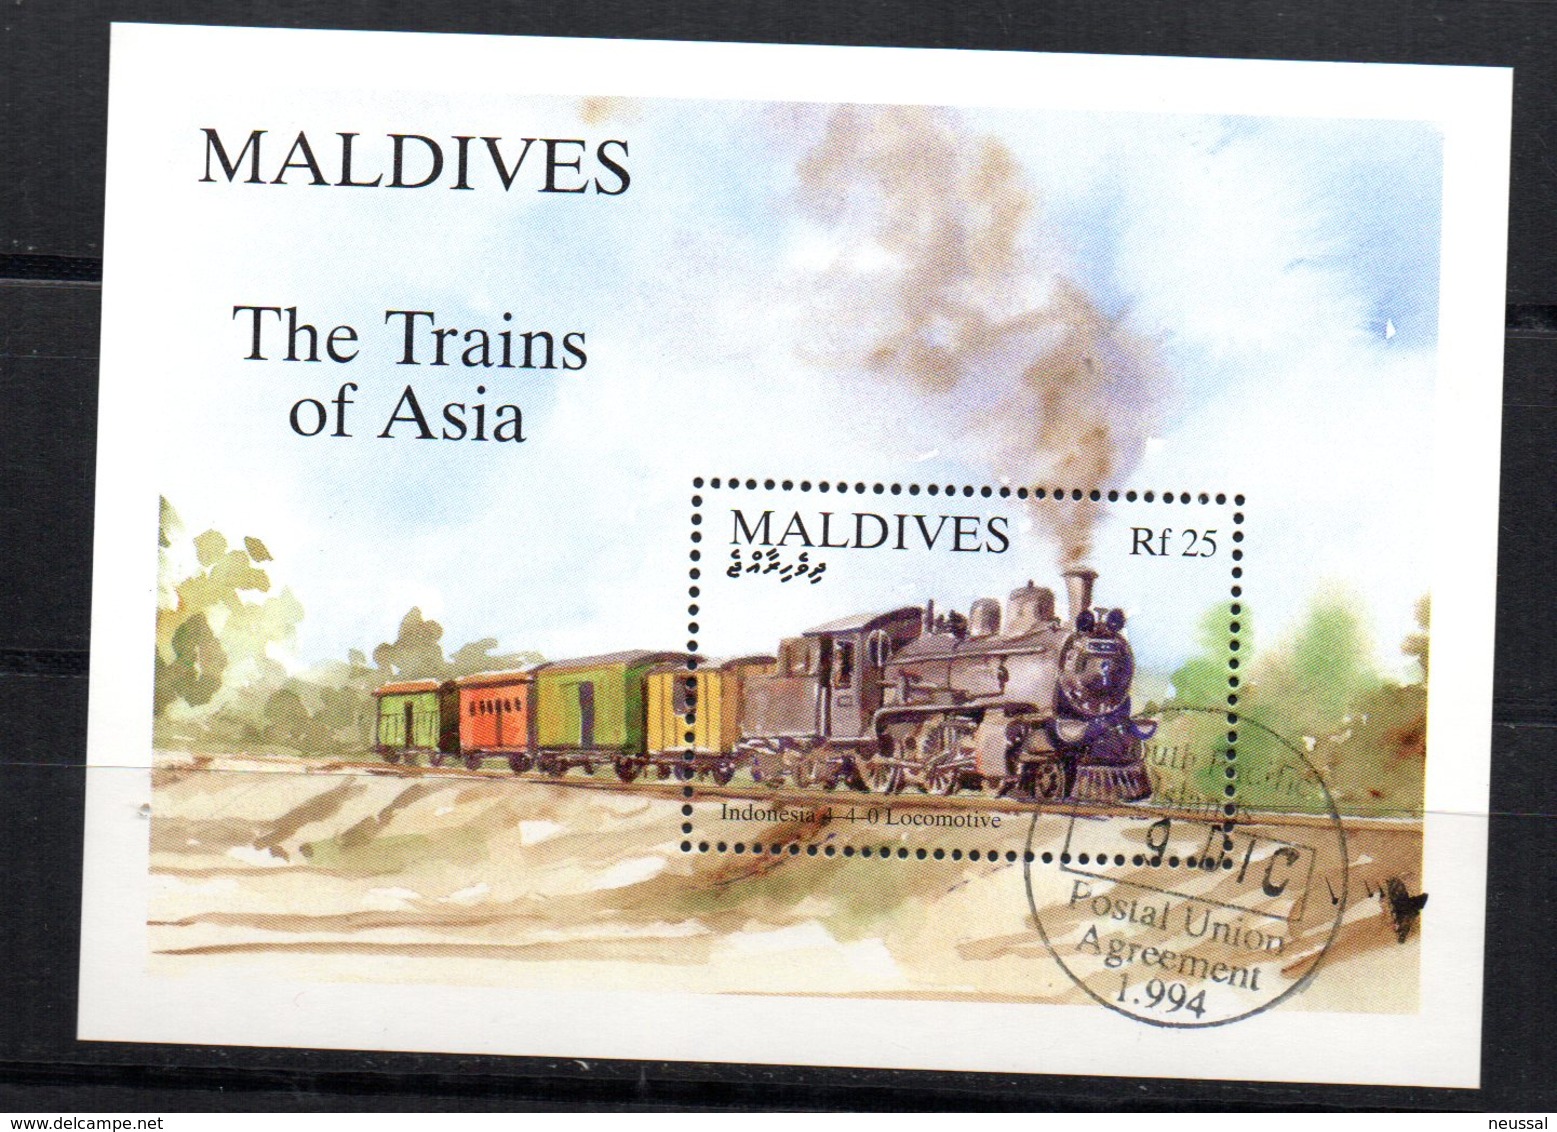 Hb-311  Used  Maldives - Trains